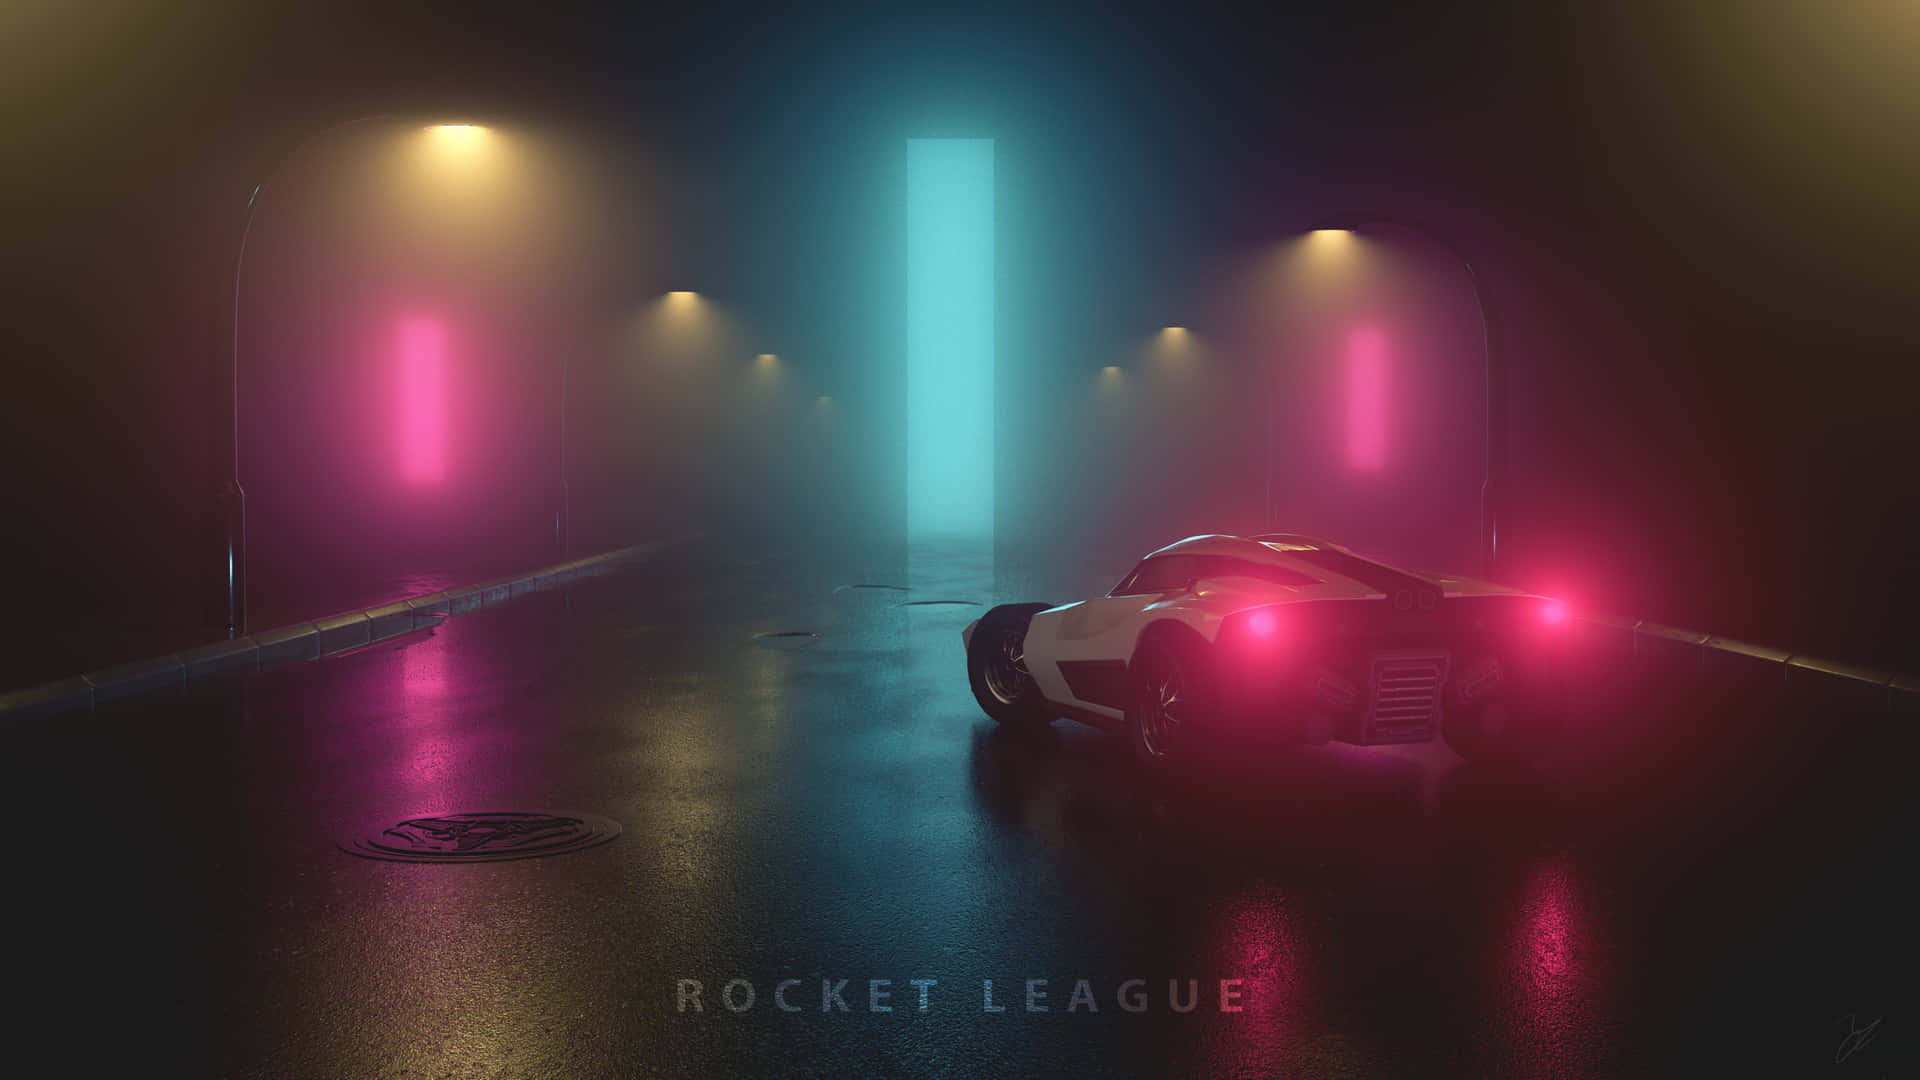 720p Rocket League Background Poster Lights Background